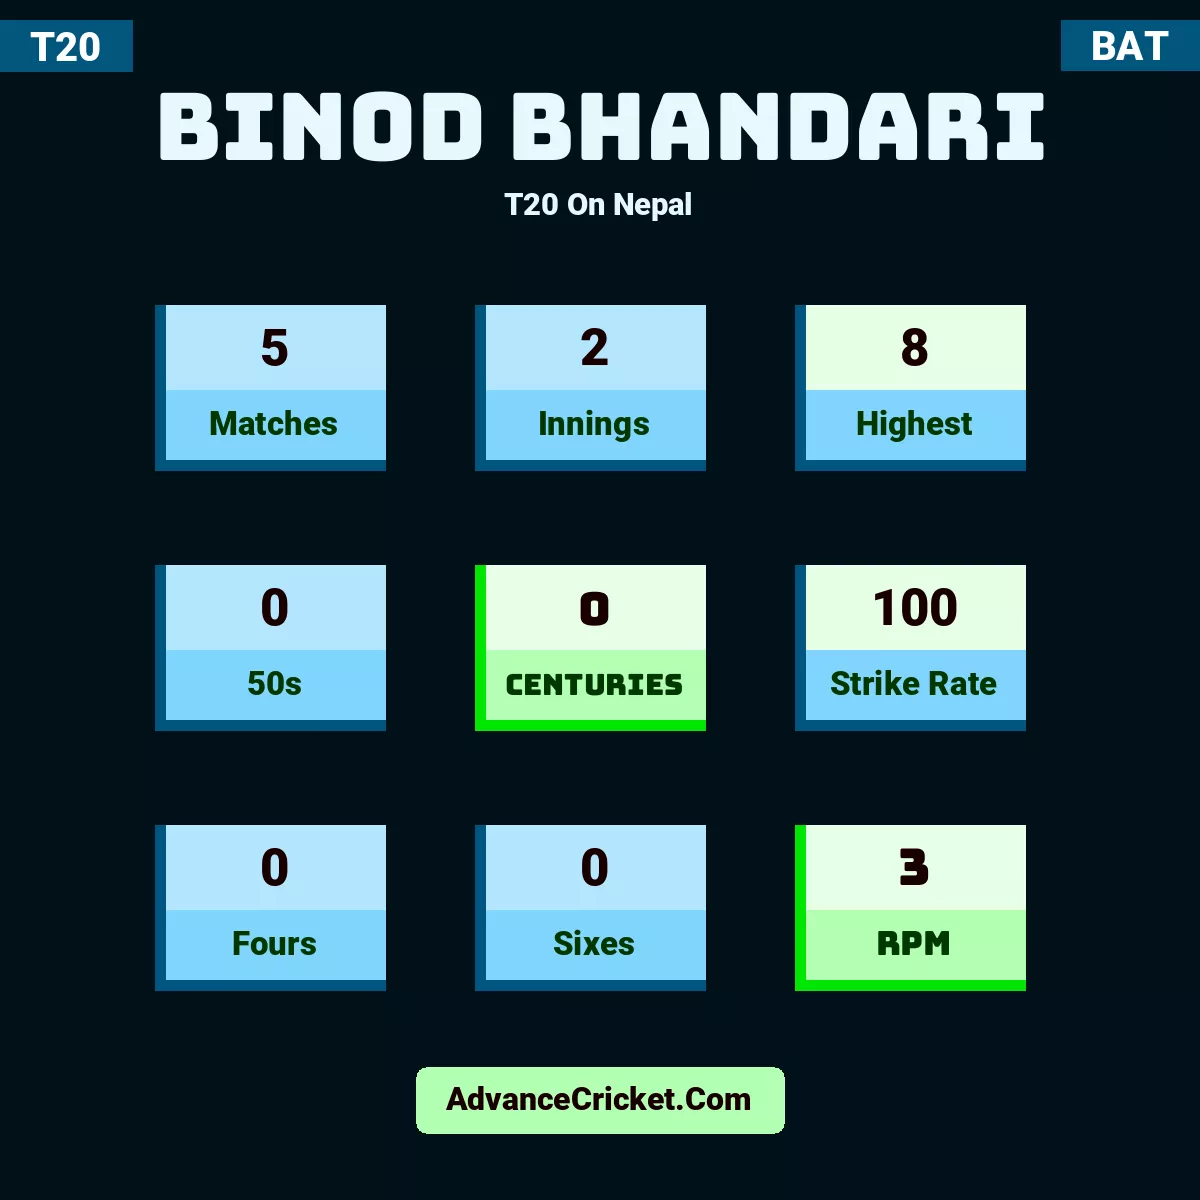 Binod Bhandari T20  On Nepal, Binod Bhandari played 5 matches, scored 8 runs as highest, 0 half-centuries, and 0 centuries, with a strike rate of 100. B.Bhandari hit 0 fours and 0 sixes, with an RPM of 3.